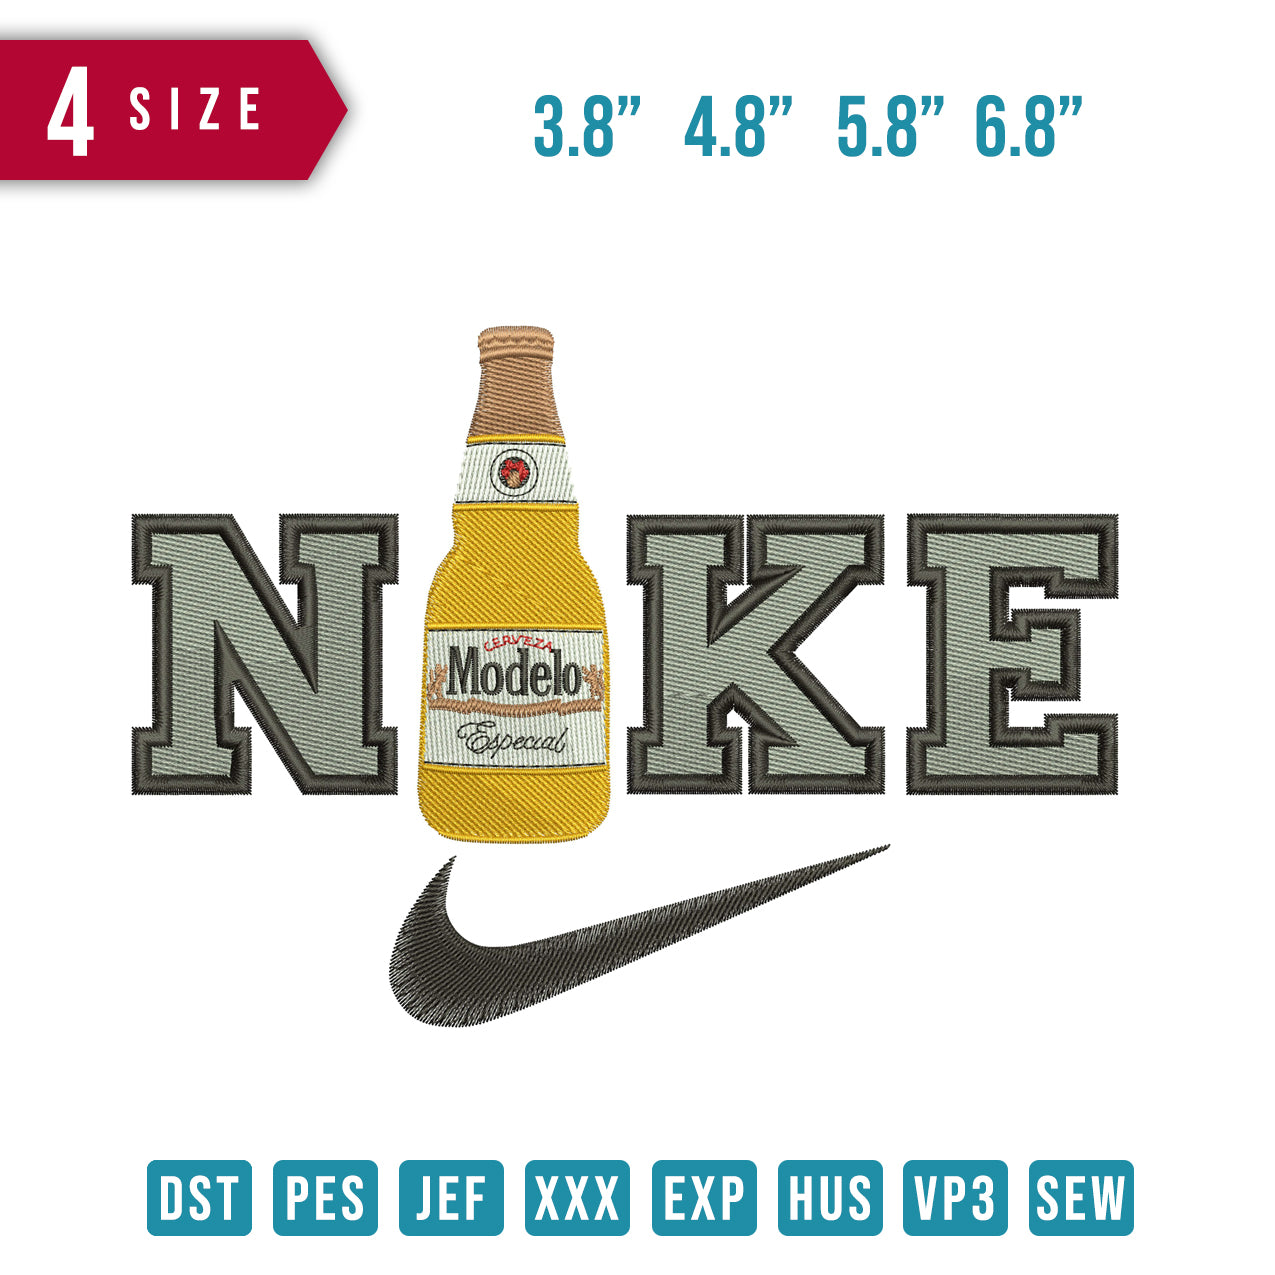 Nike Modelo Glass Bottle